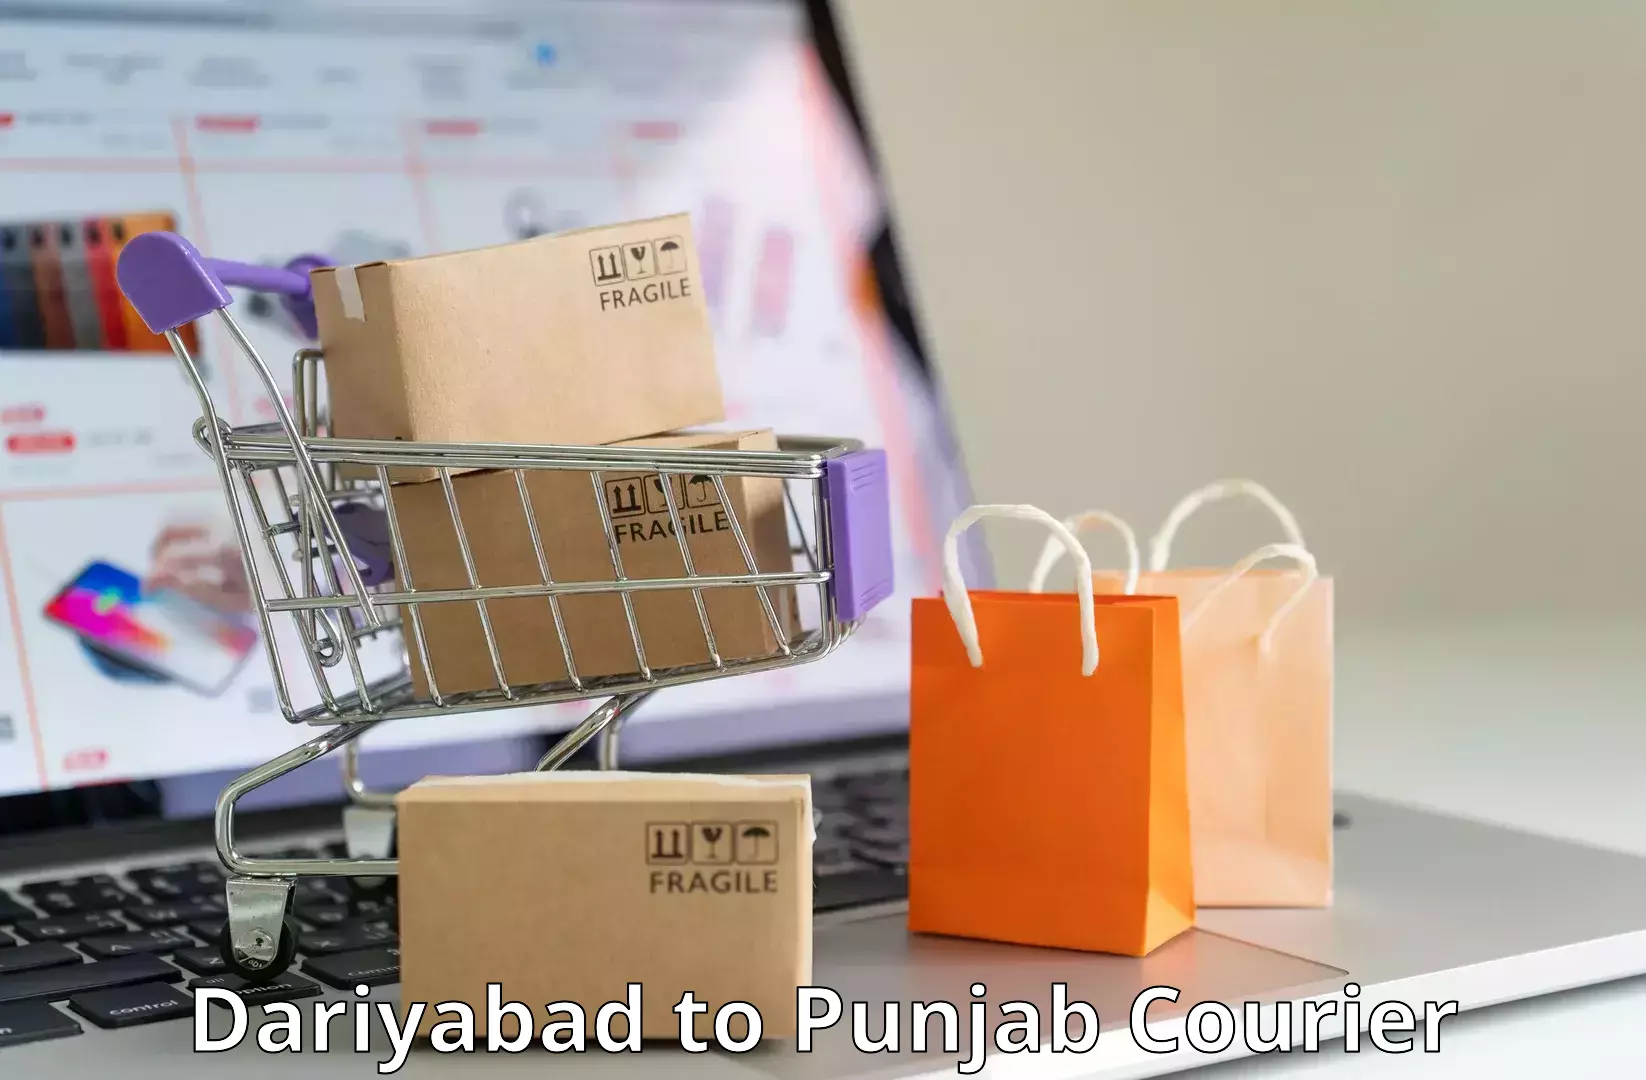 Business shipping needs Dariyabad to Punjab